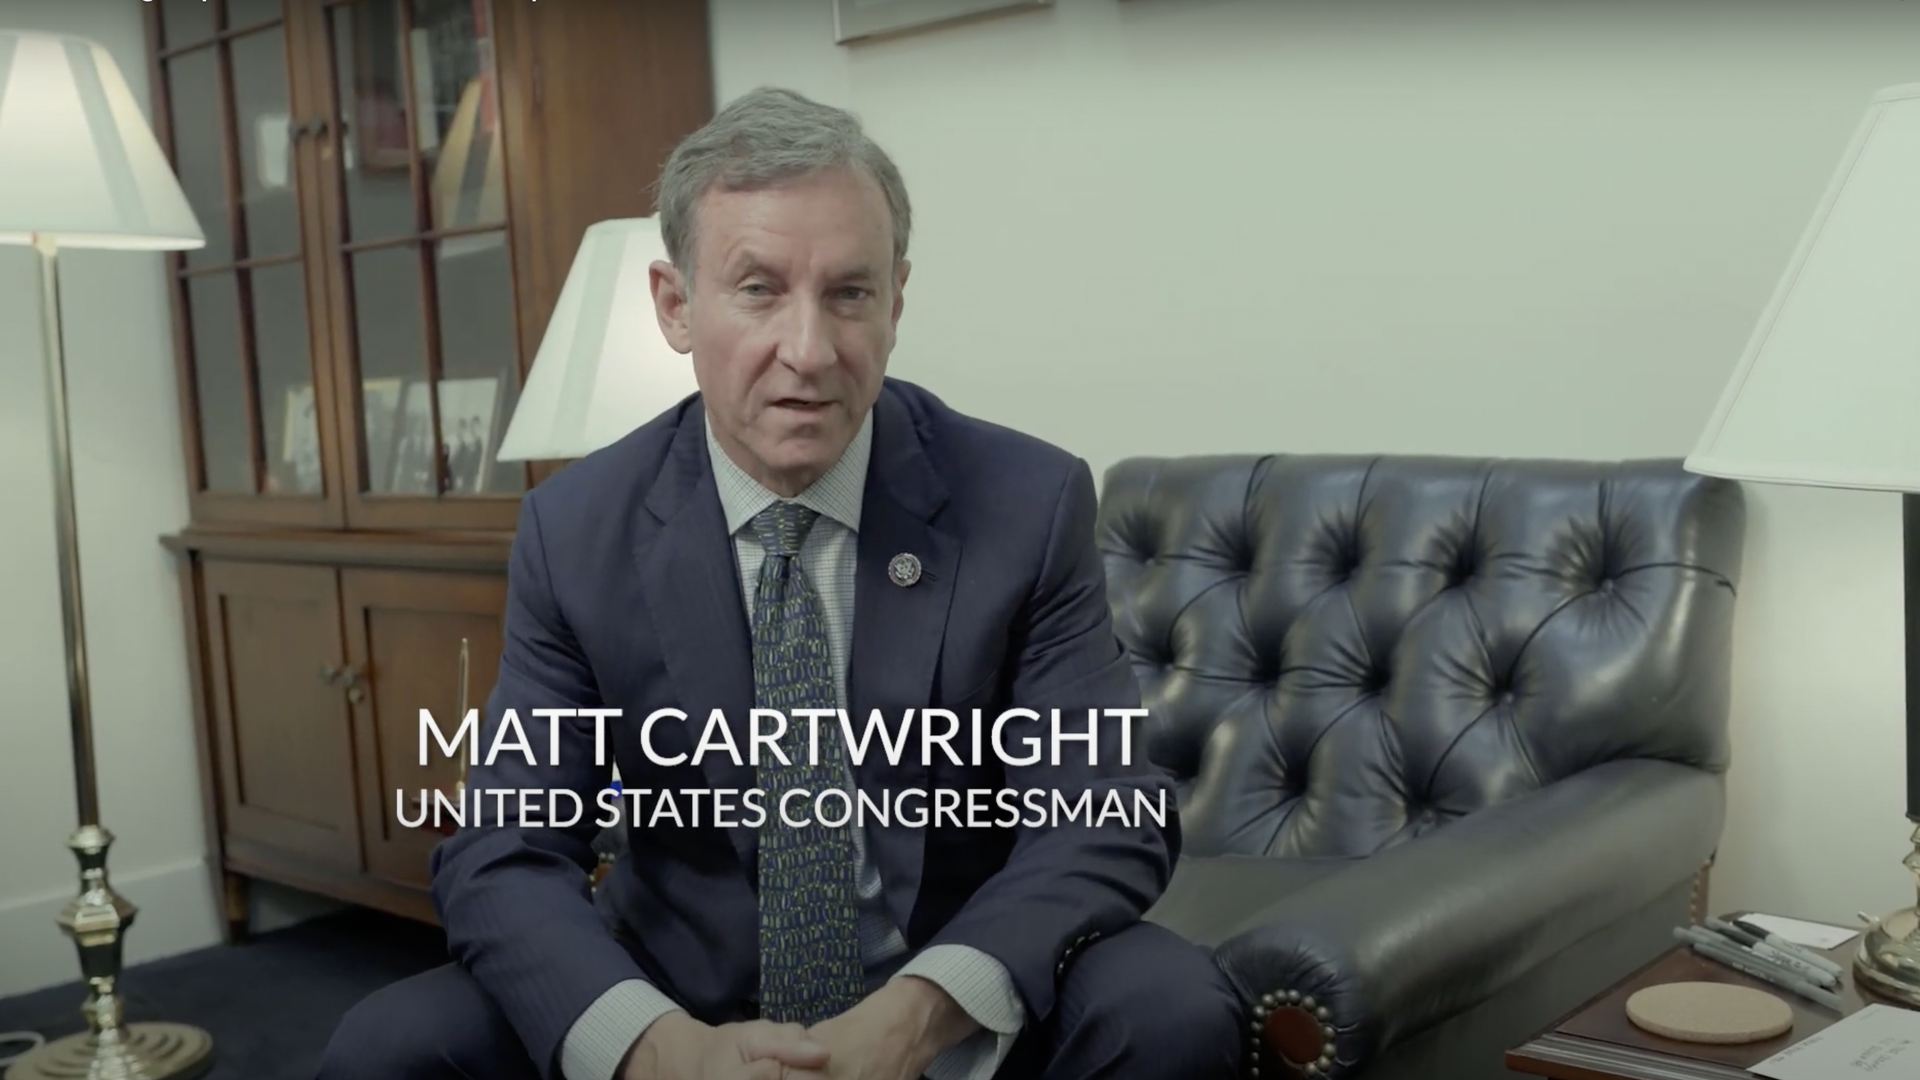 Rep. Matt Cartwright speaks in a video praising the law firm Parker Waichman.